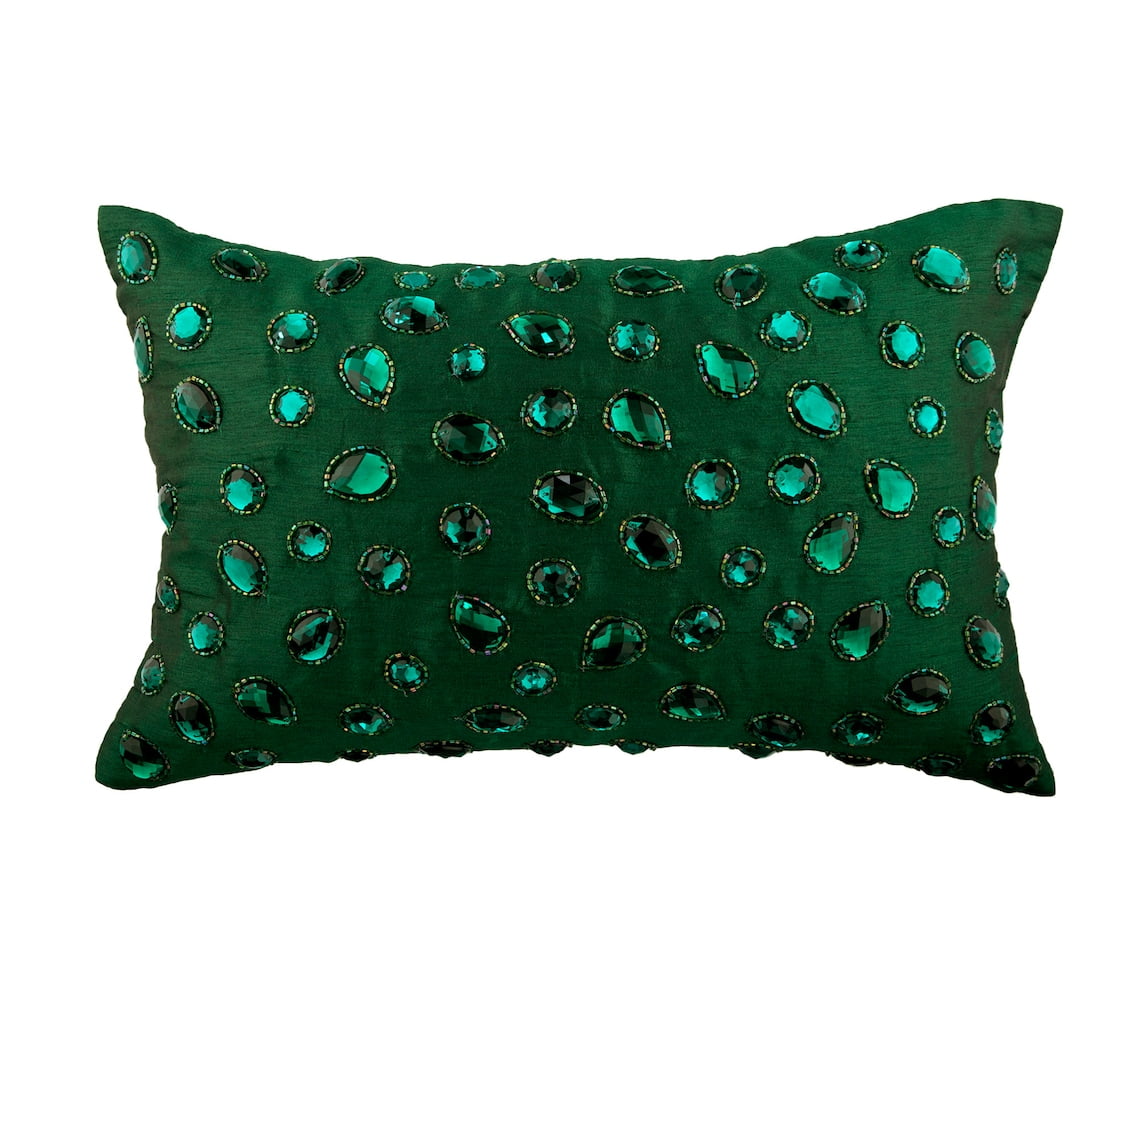 Arch Balance Green - Mid Century Modern Throw Pillow, 16x16, Multicolor